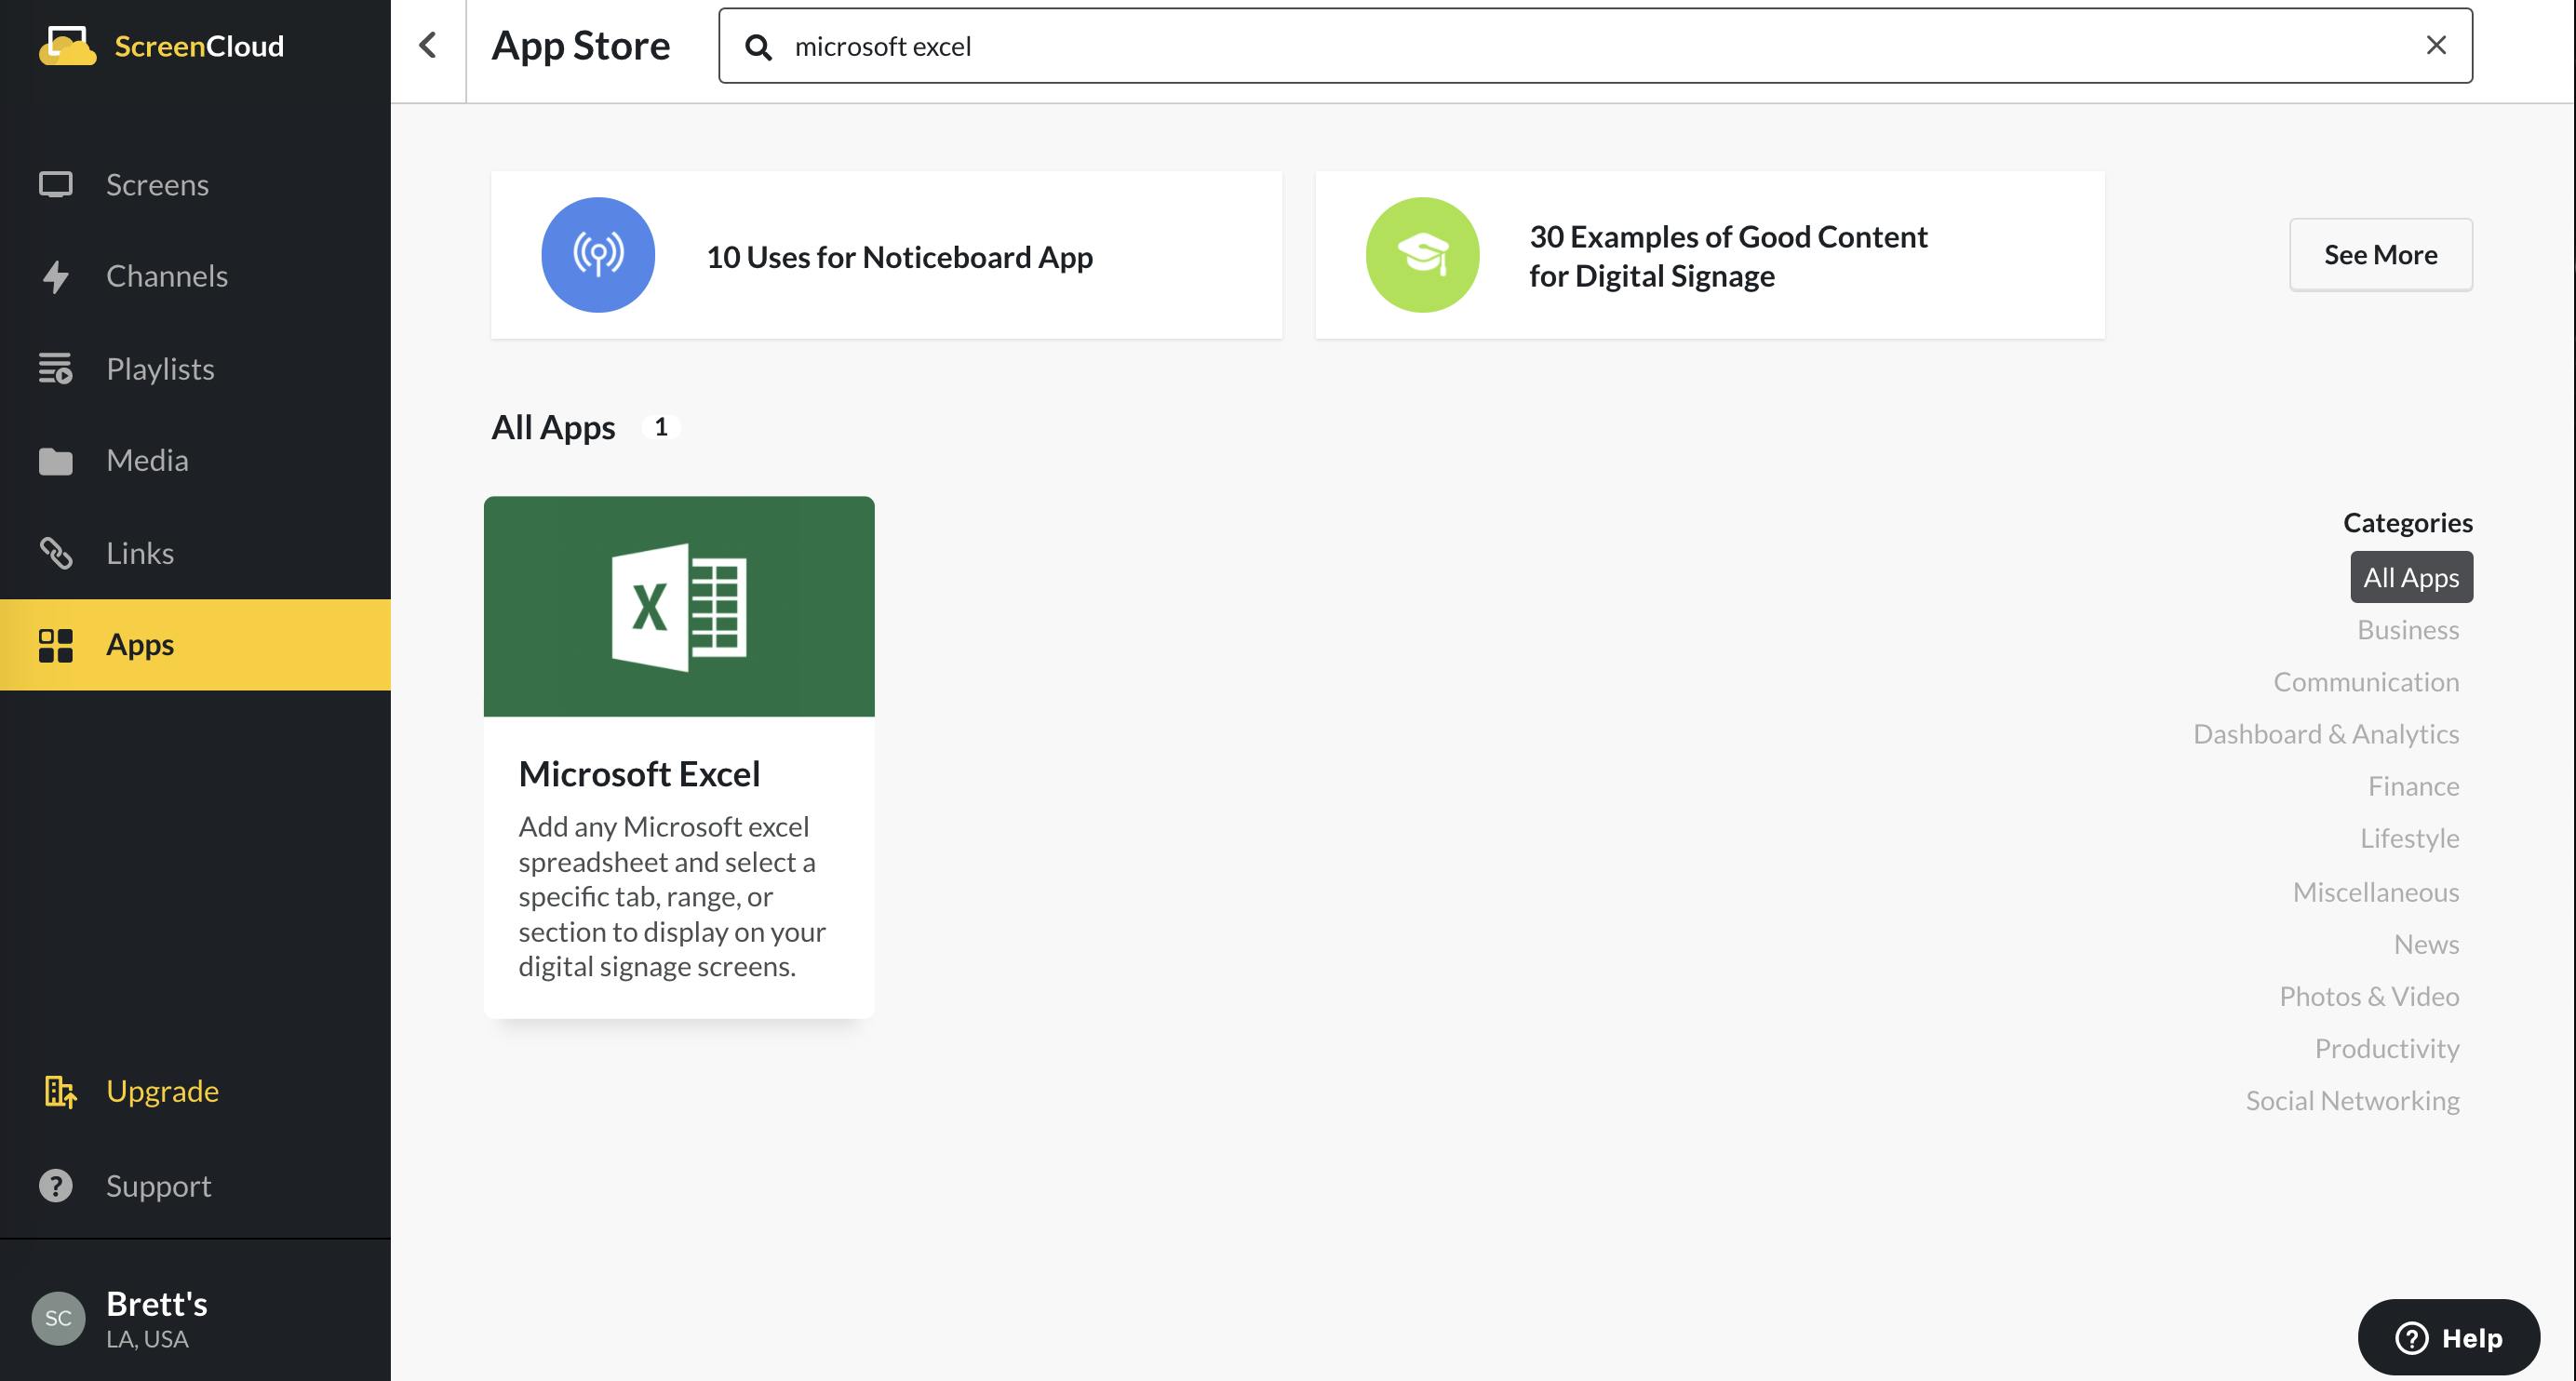 Microsoft Excel App Guide - App Store 5.13.2020.png
